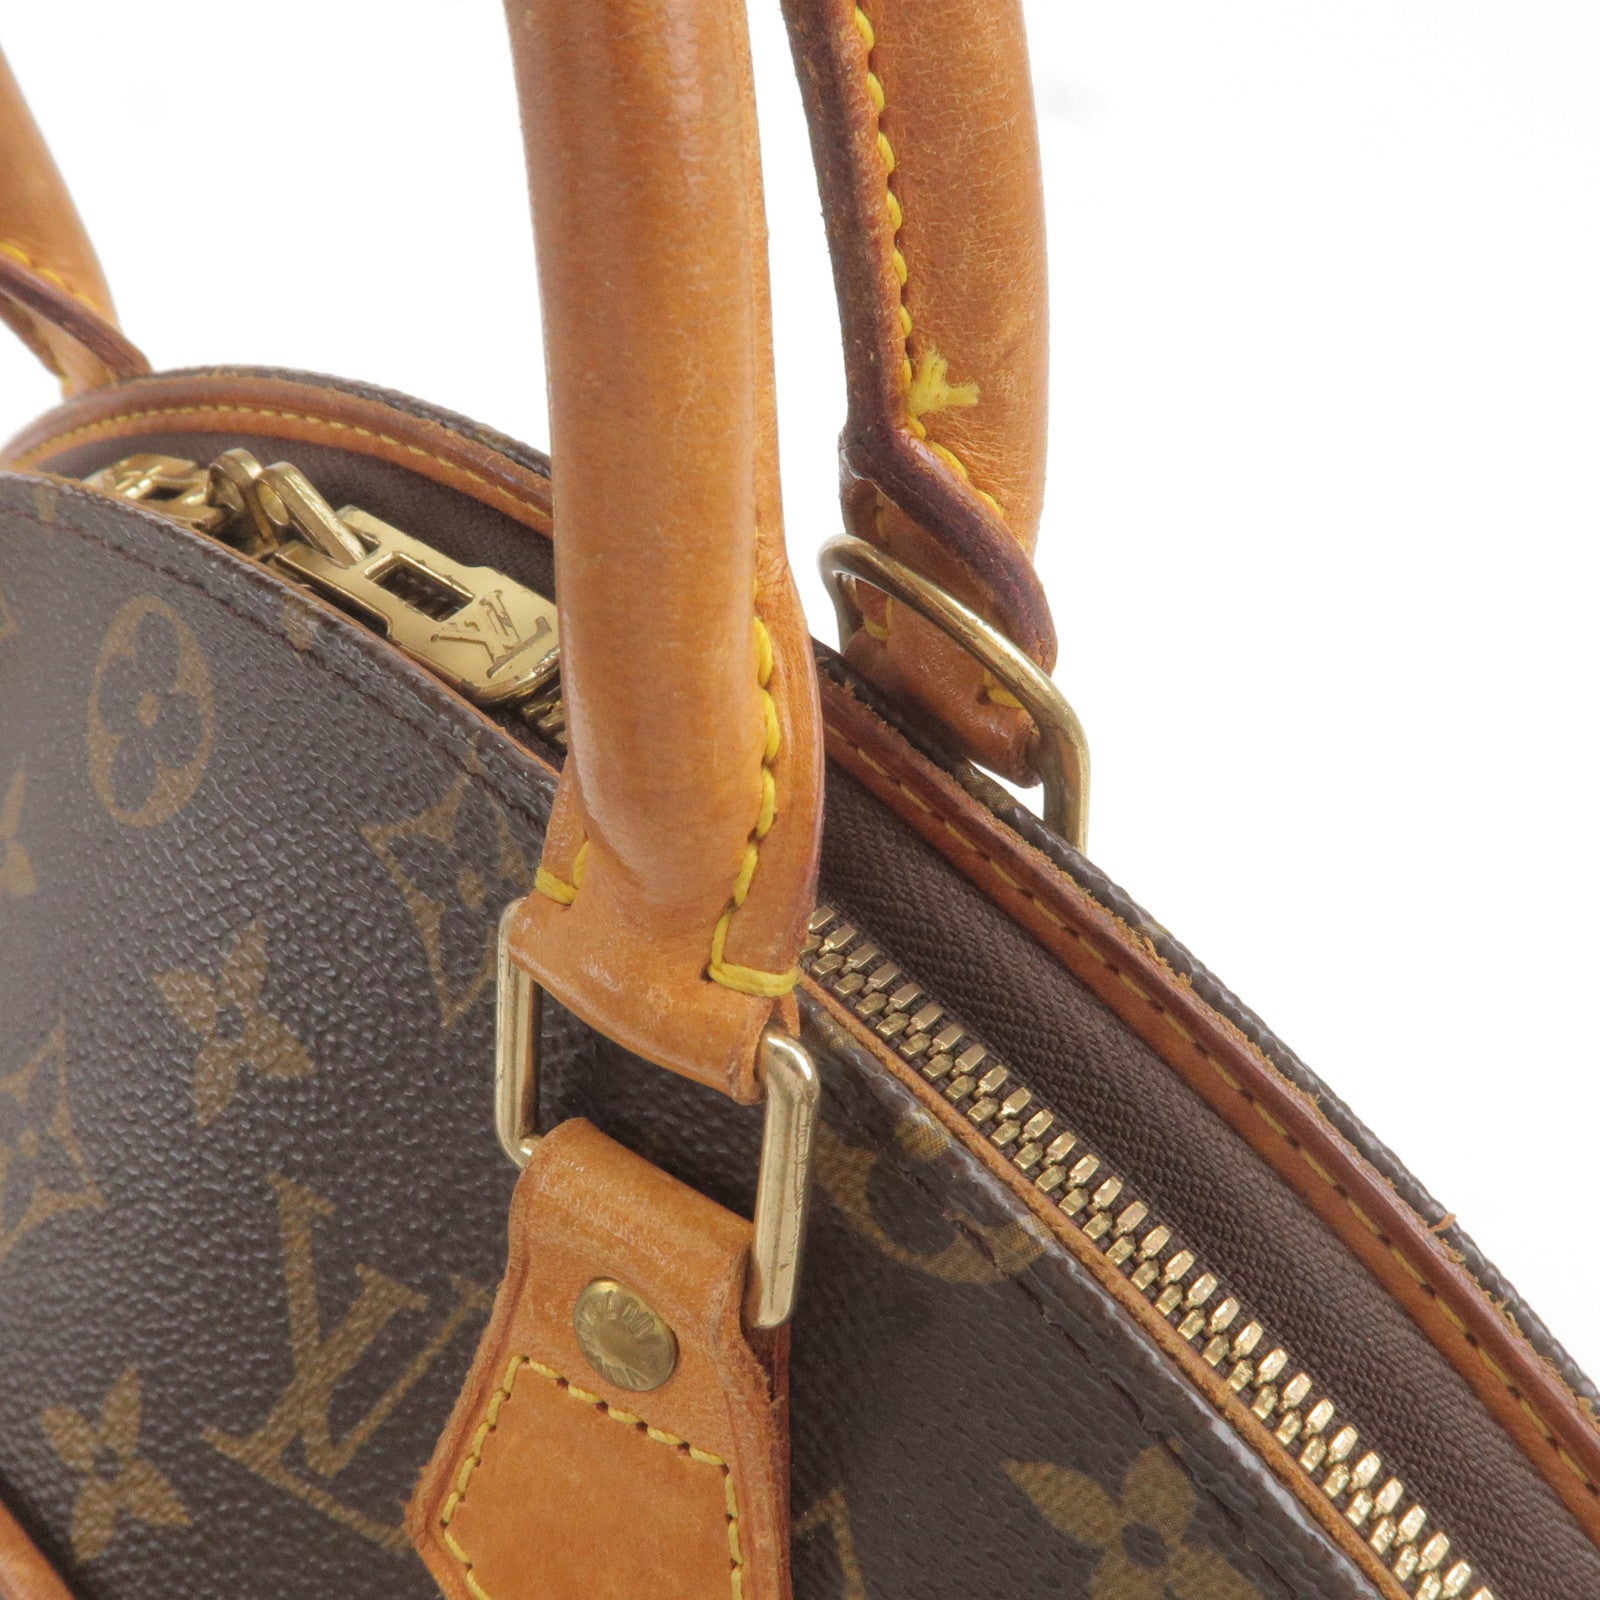 LOUIS VUITTON Alma BB Graffiti limited edition handbag in leather